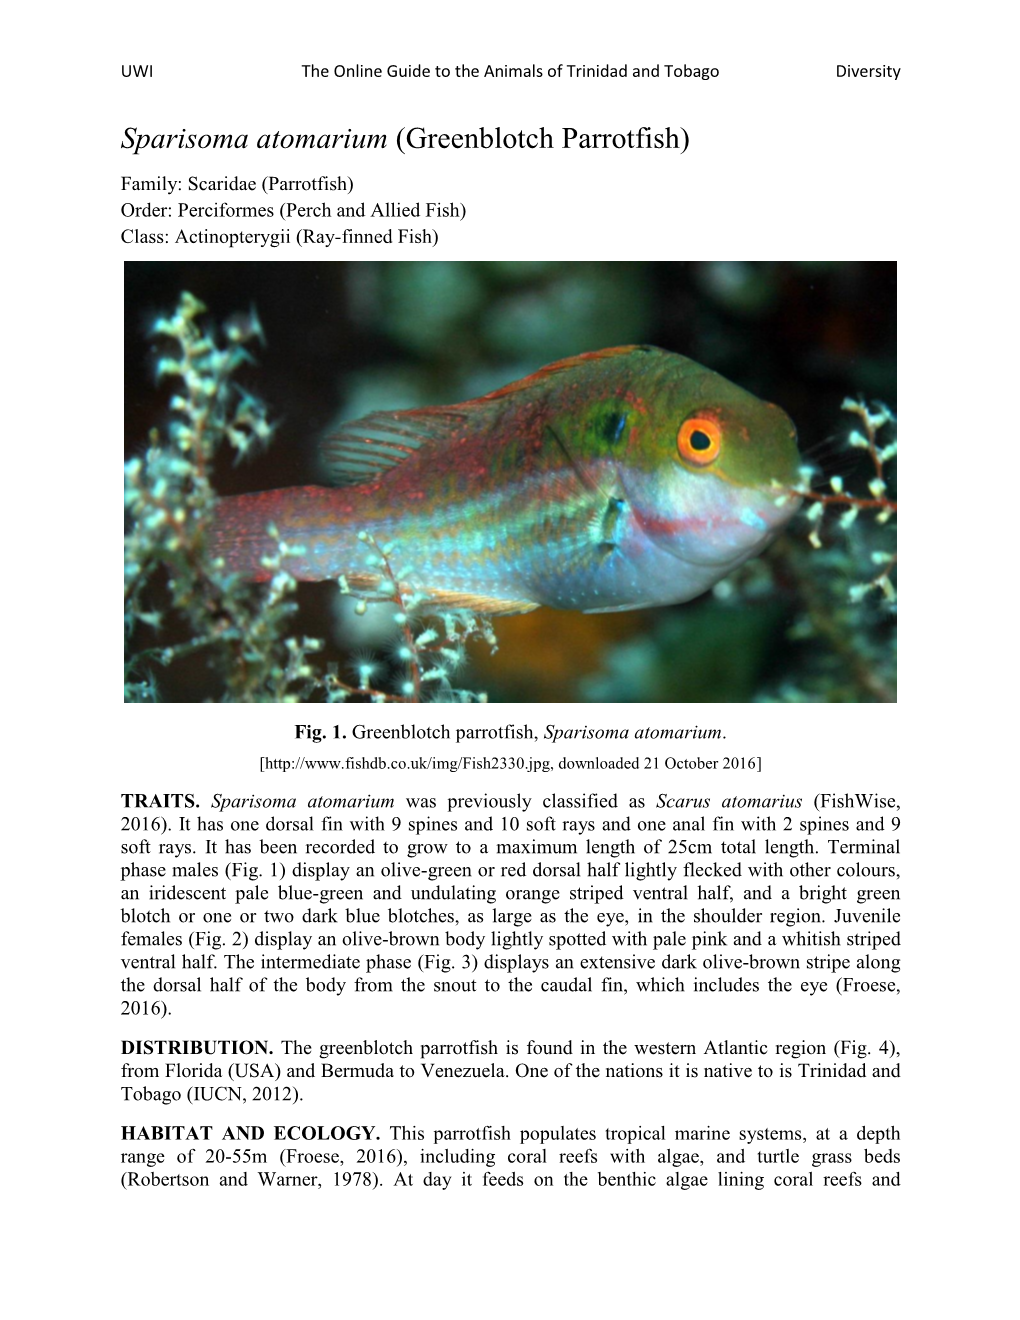 Sparisoma Atomarium (Greenblotch Parrotfish)